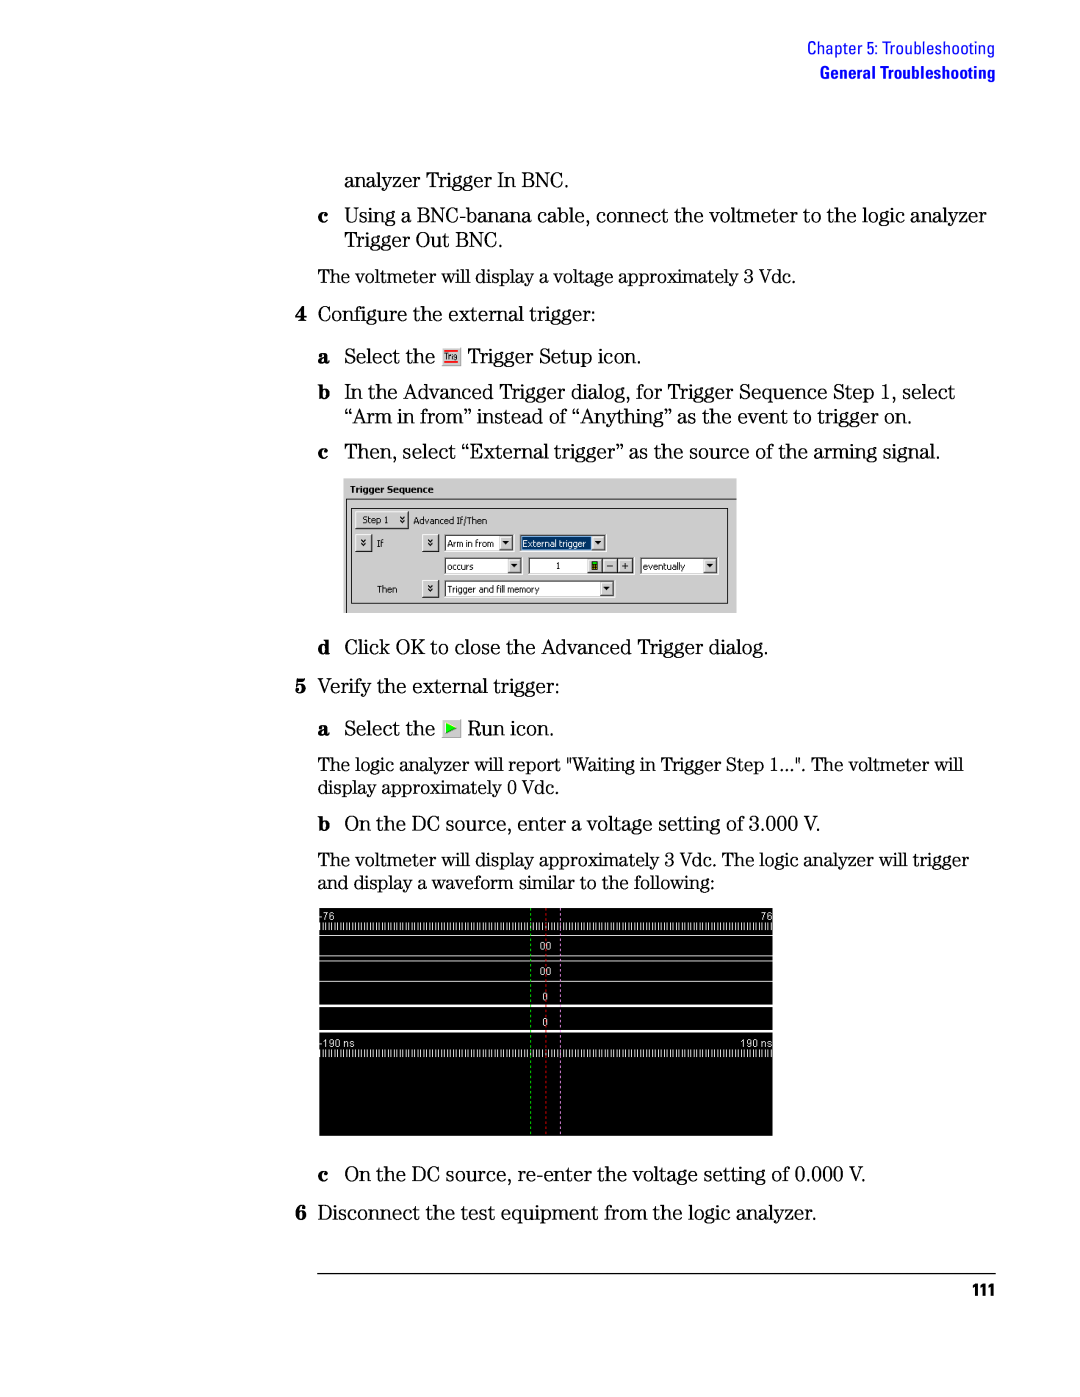 Agilent Technologies 1690, 1680 manual analyzer Trigger In BNC 